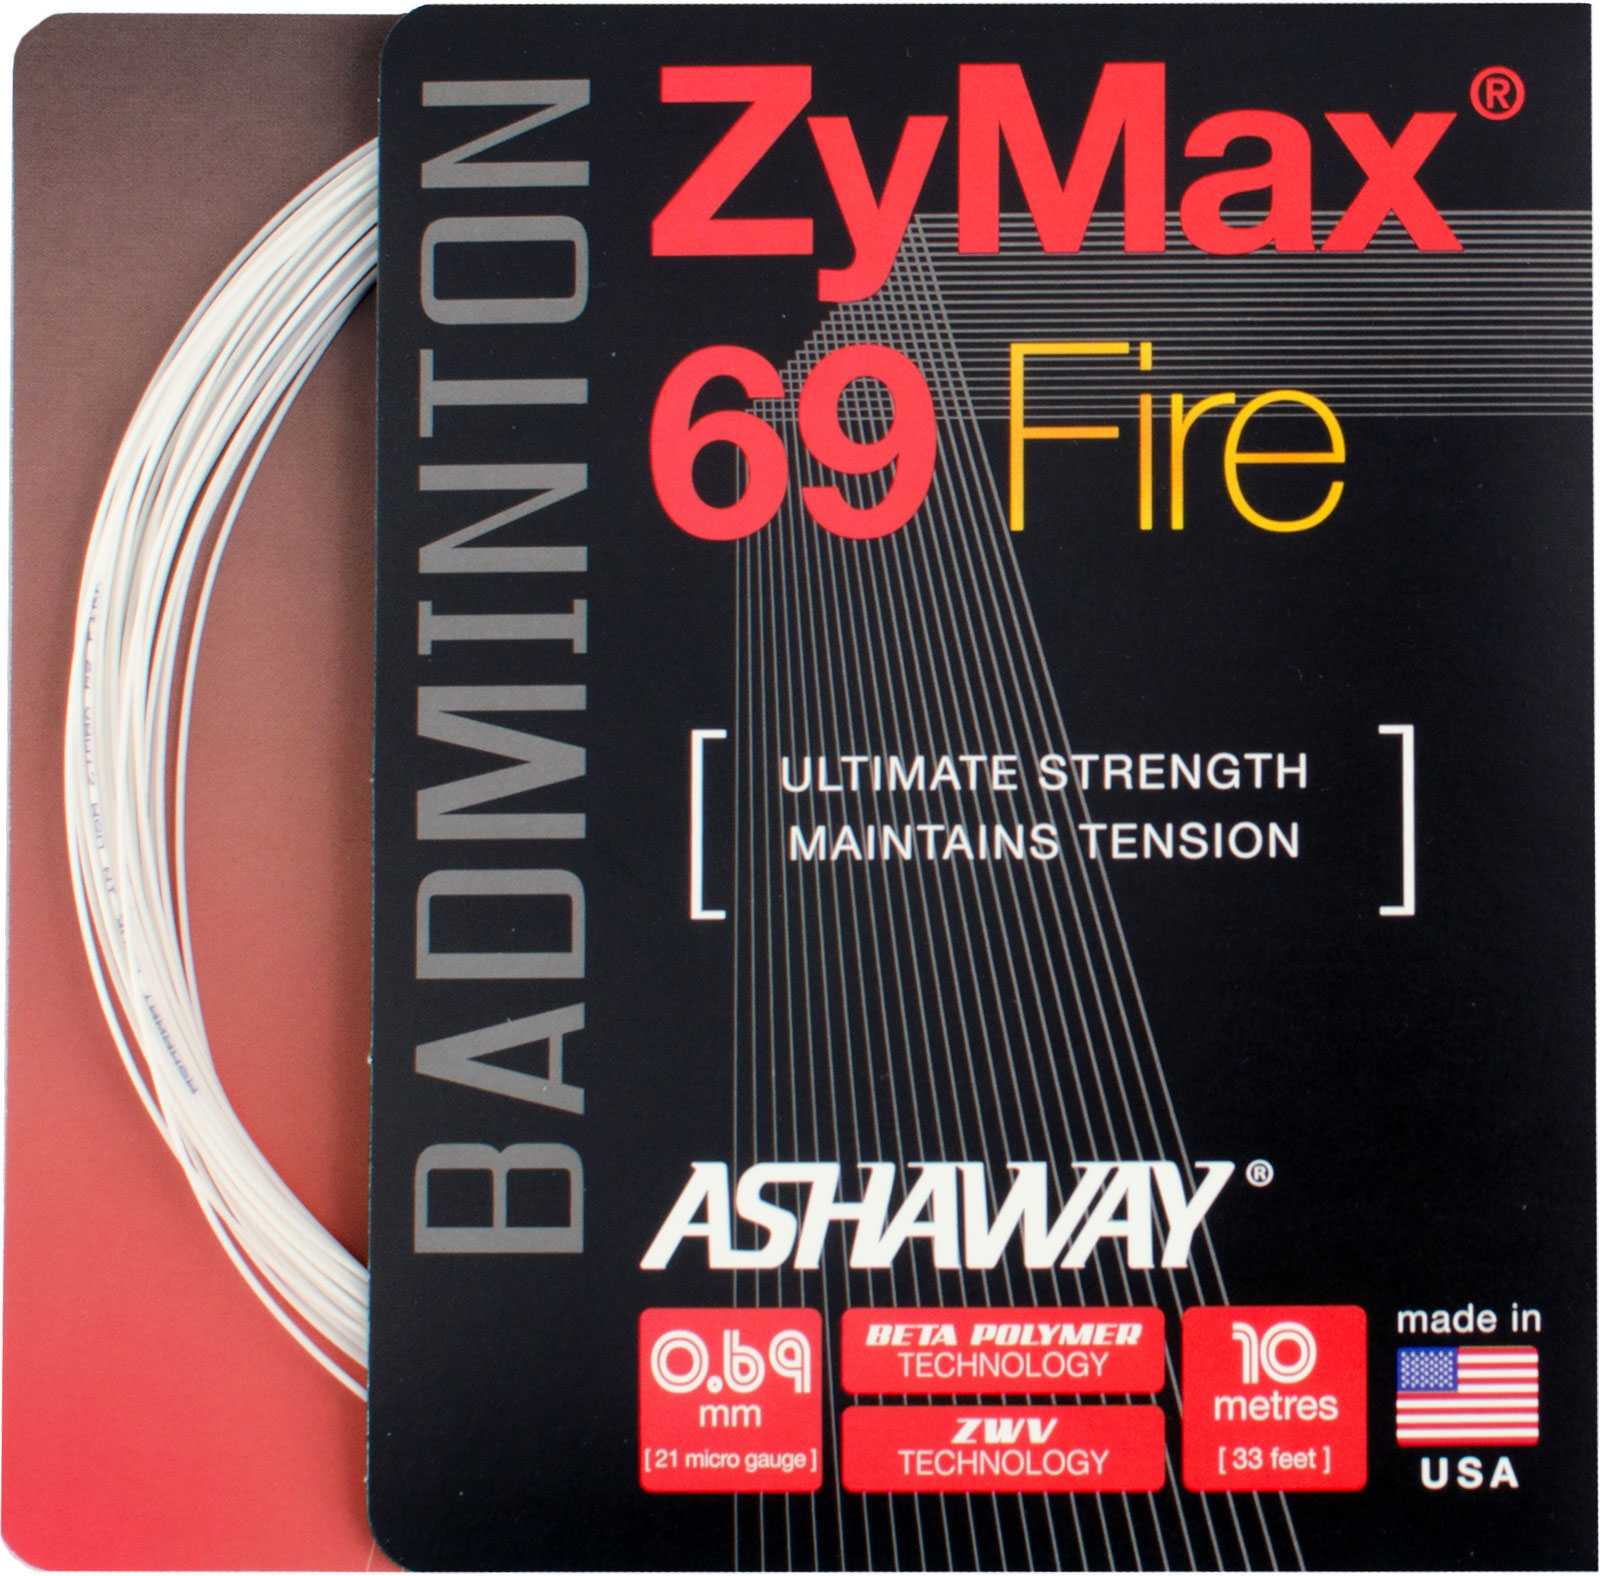 ASHAWAY Zymax 69 Fire - Weiss - Set